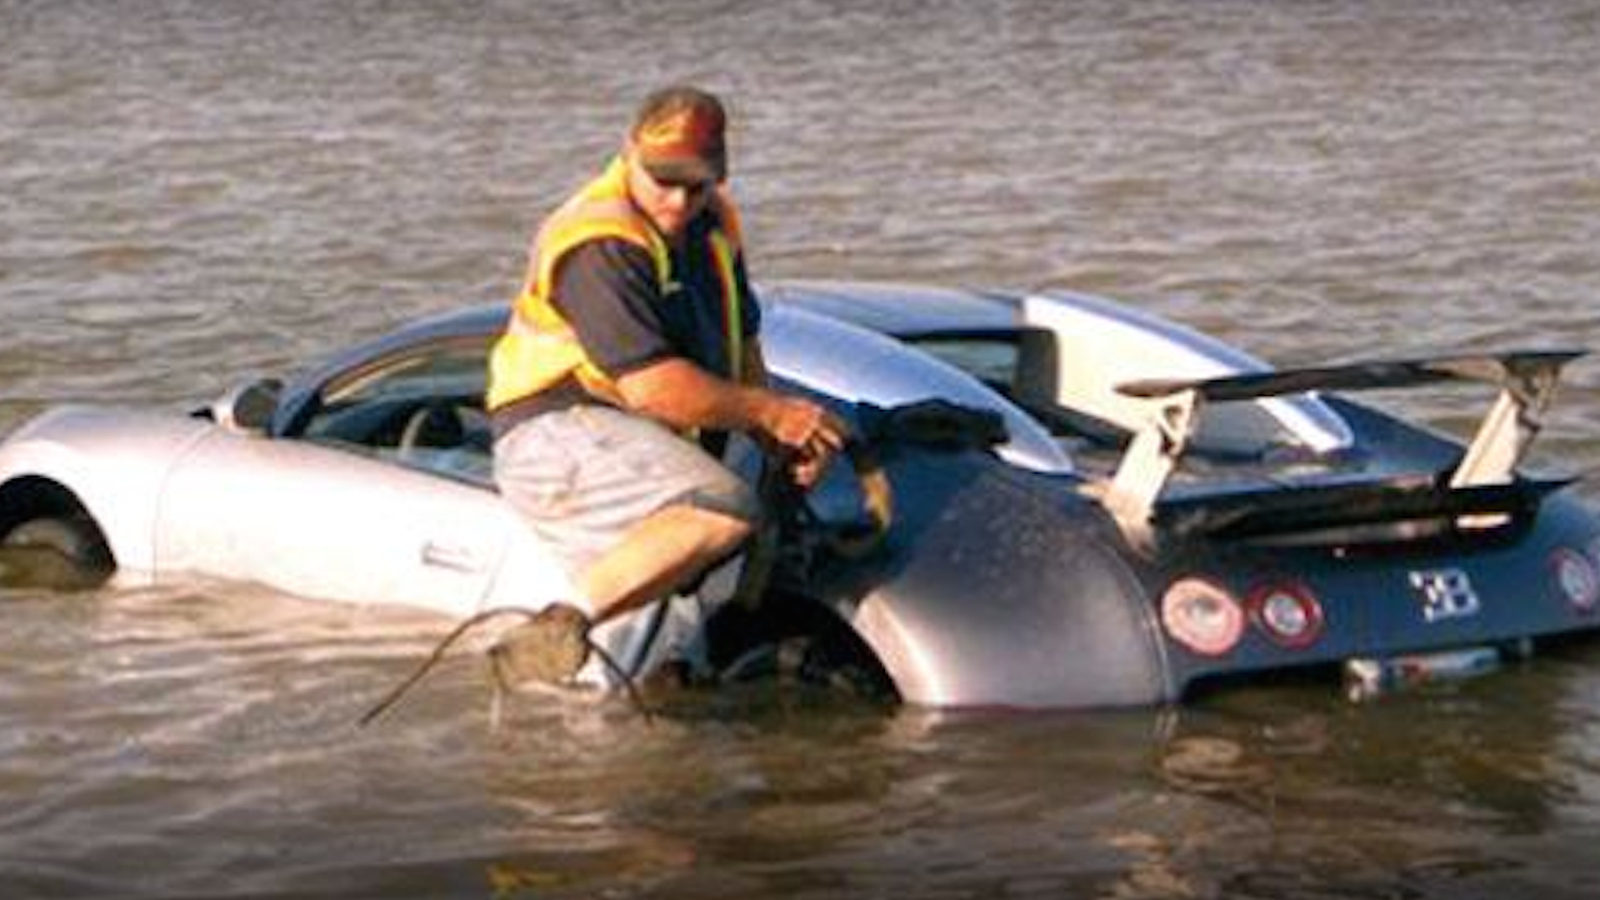 Bugatti crashes into lake